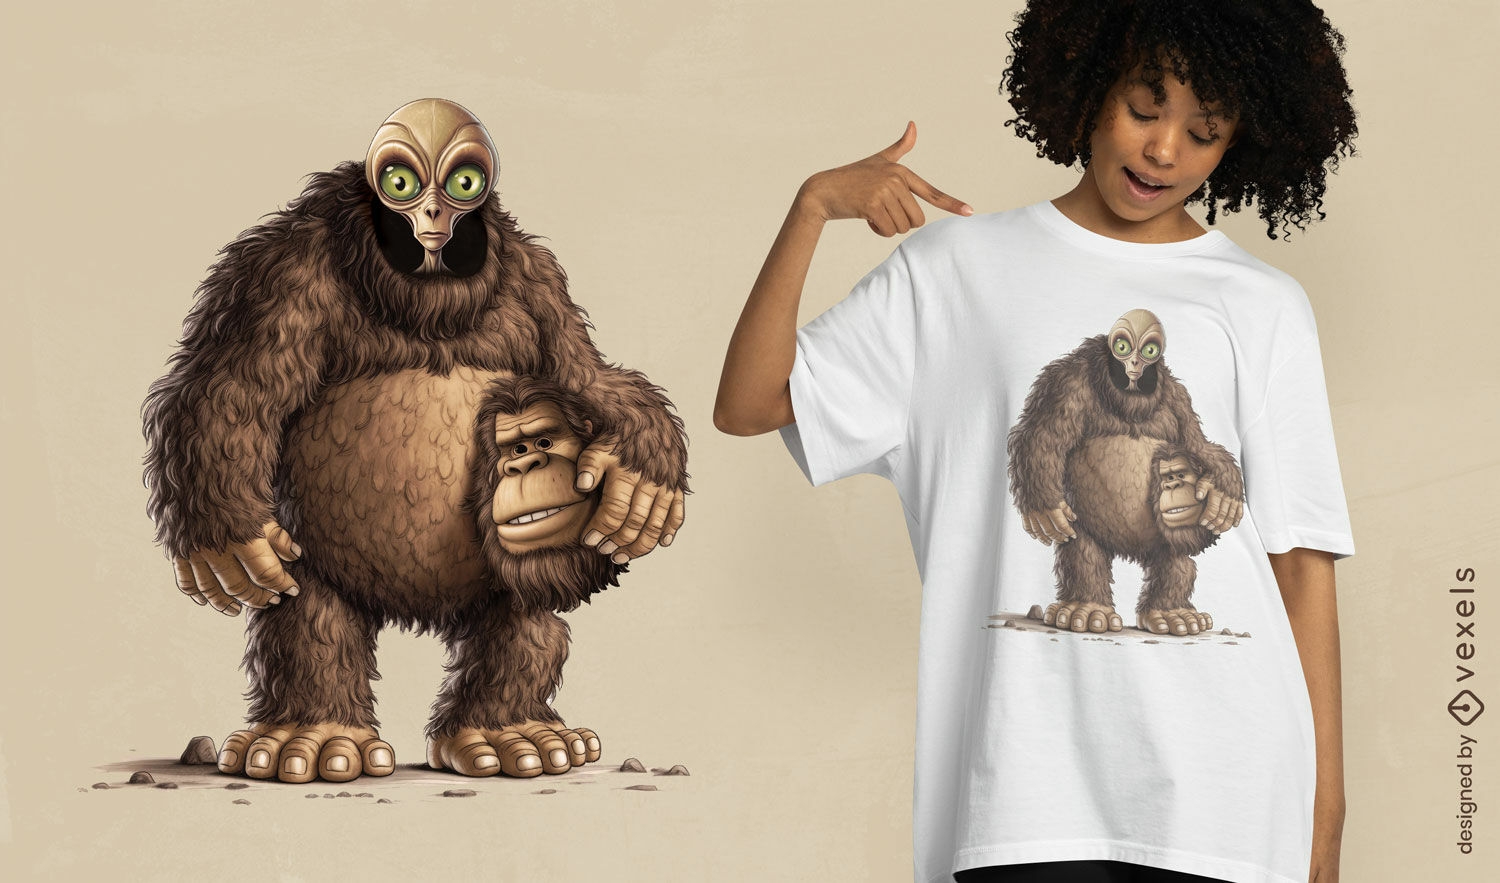 Alien with Bigfoot costume t-shirt design